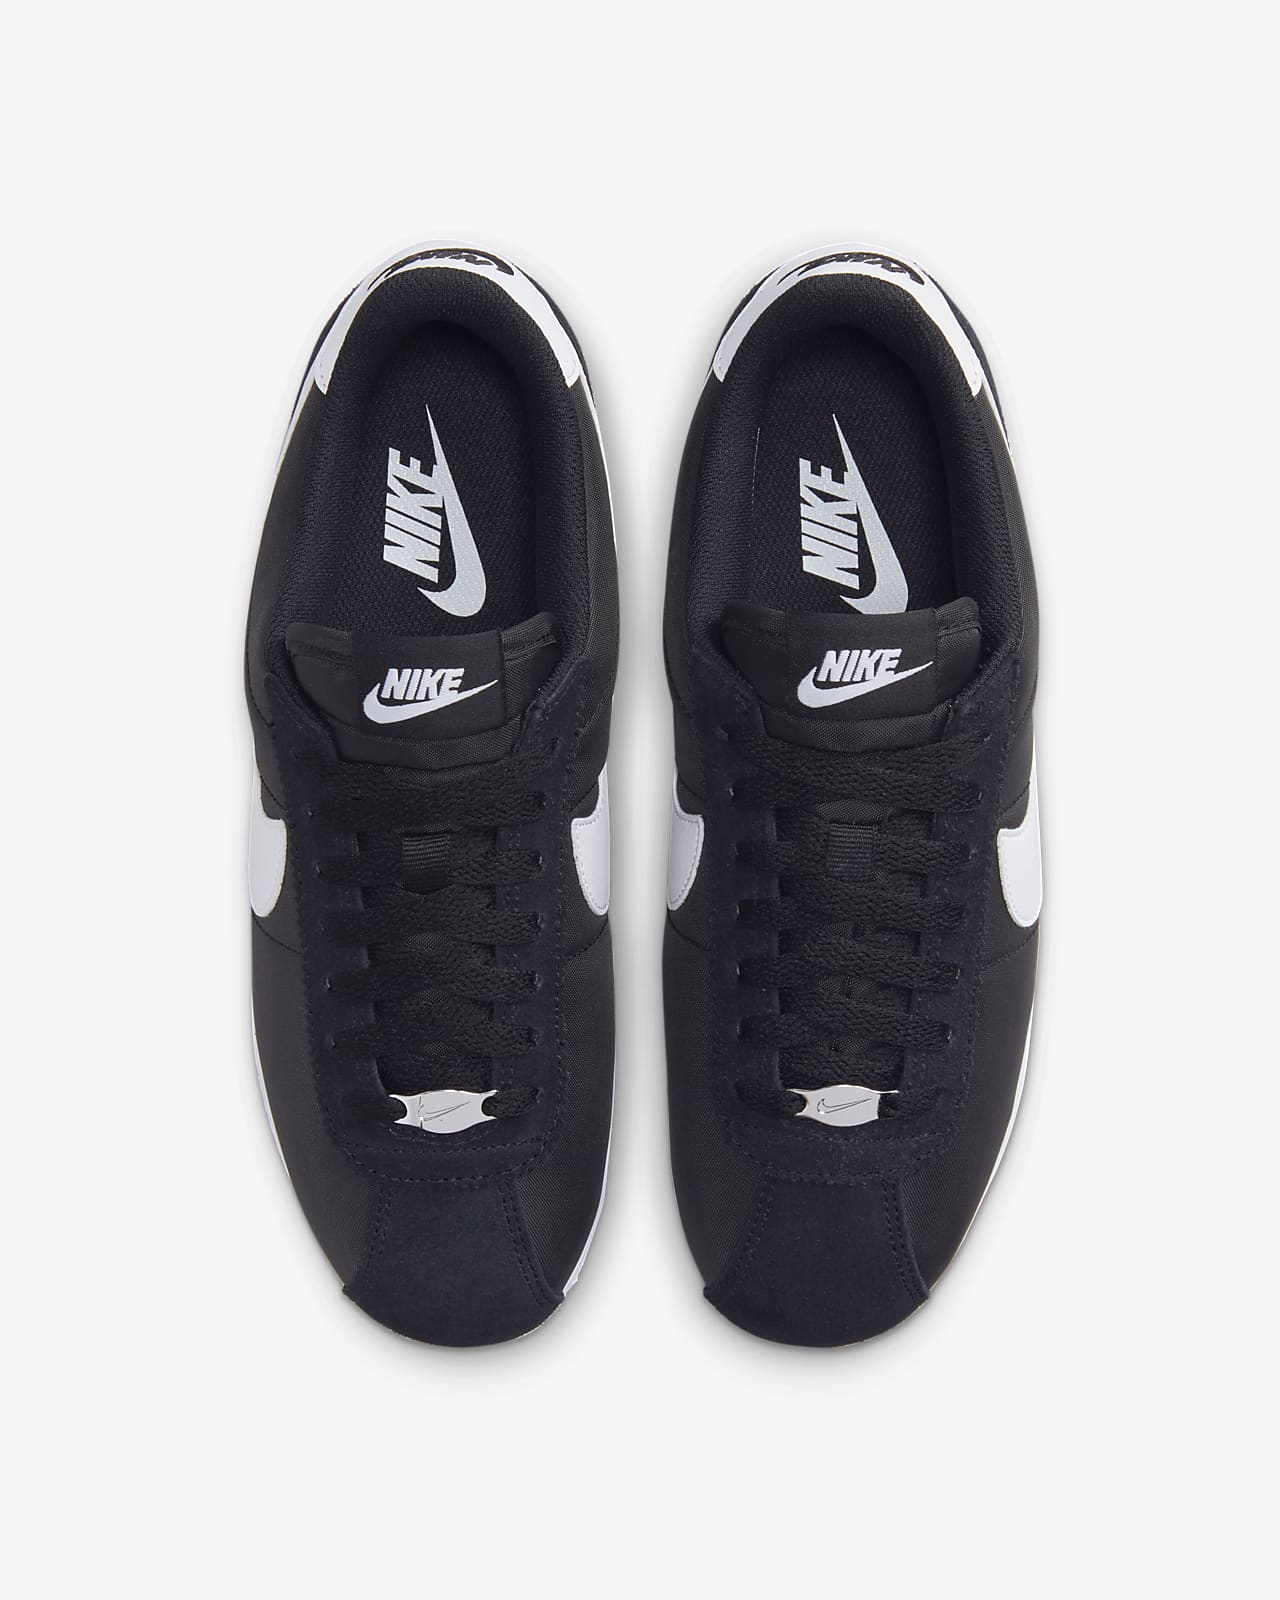 Nike Classic Cortez (Black/White) - Sneaker Freaker